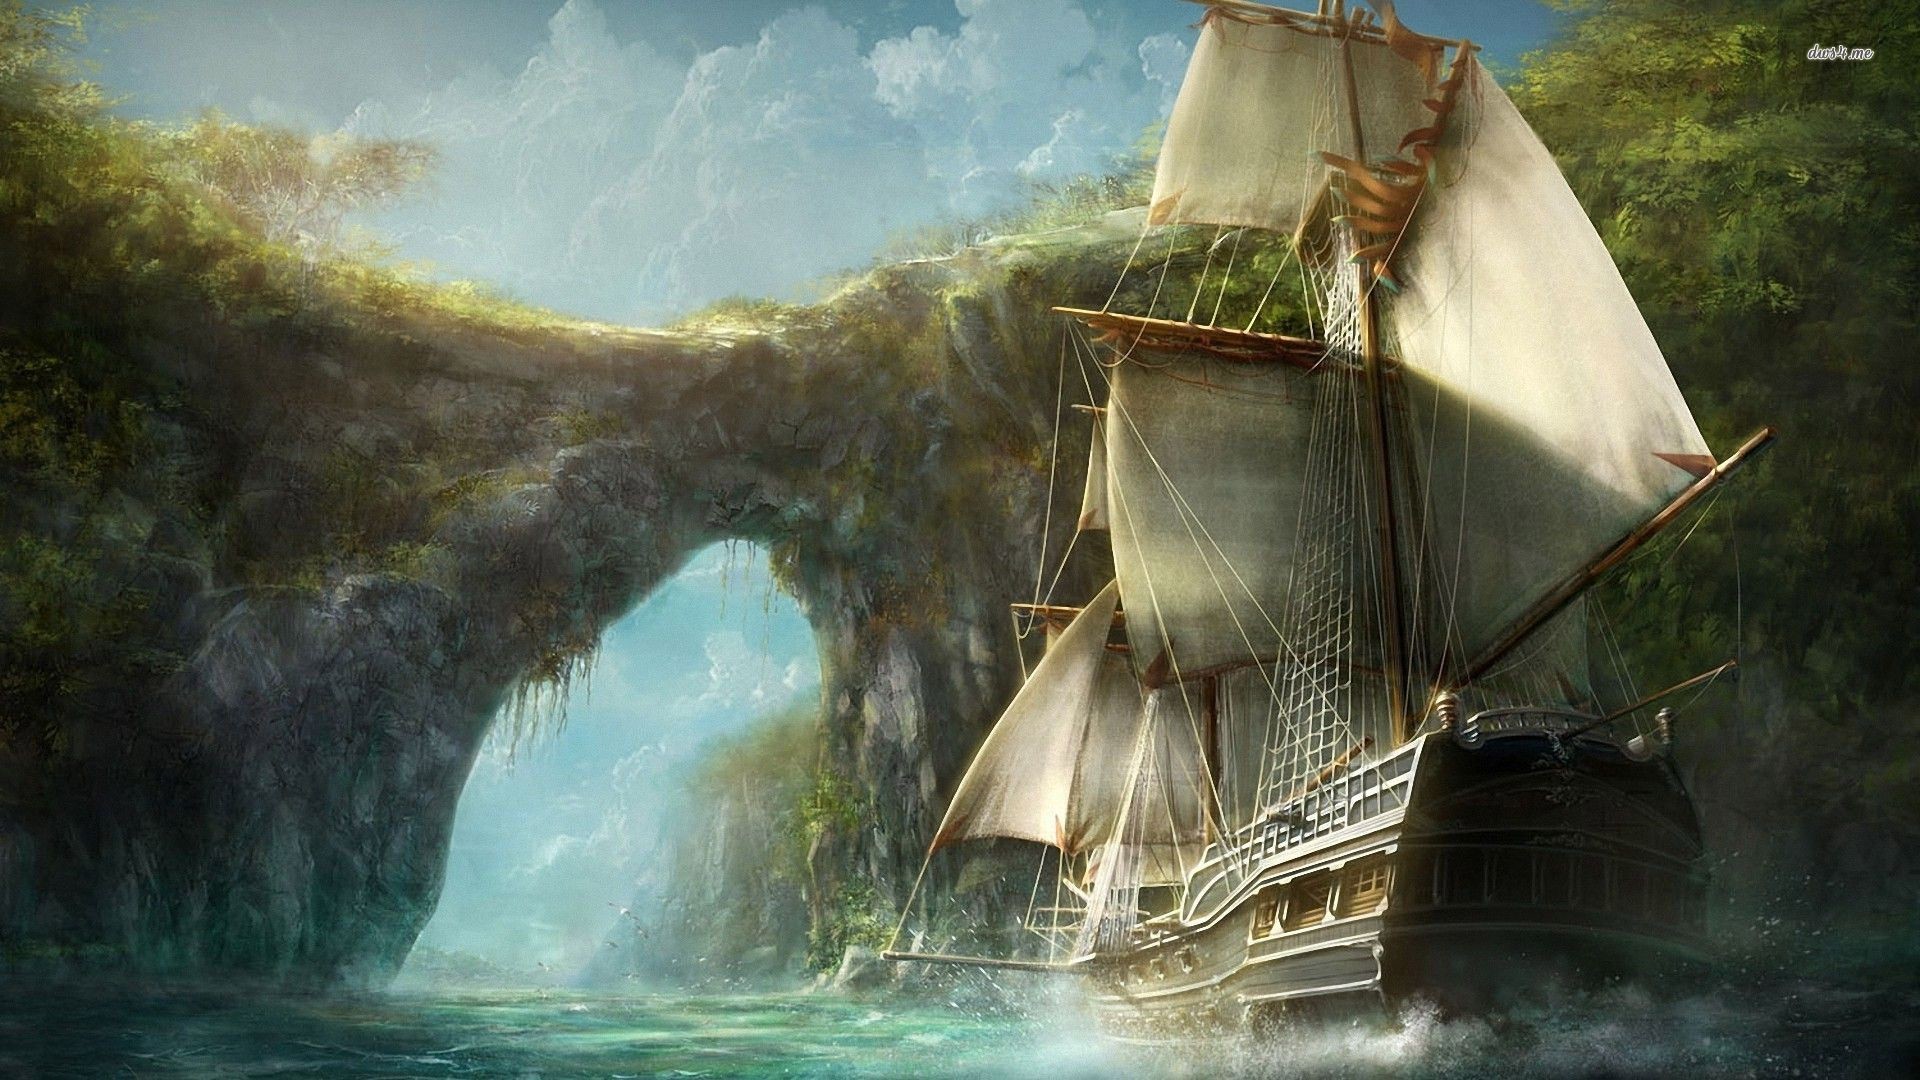 1920x1080 Medieval ship entering the island wallpaper - Fantasy wallpapers ... Desktop  ...